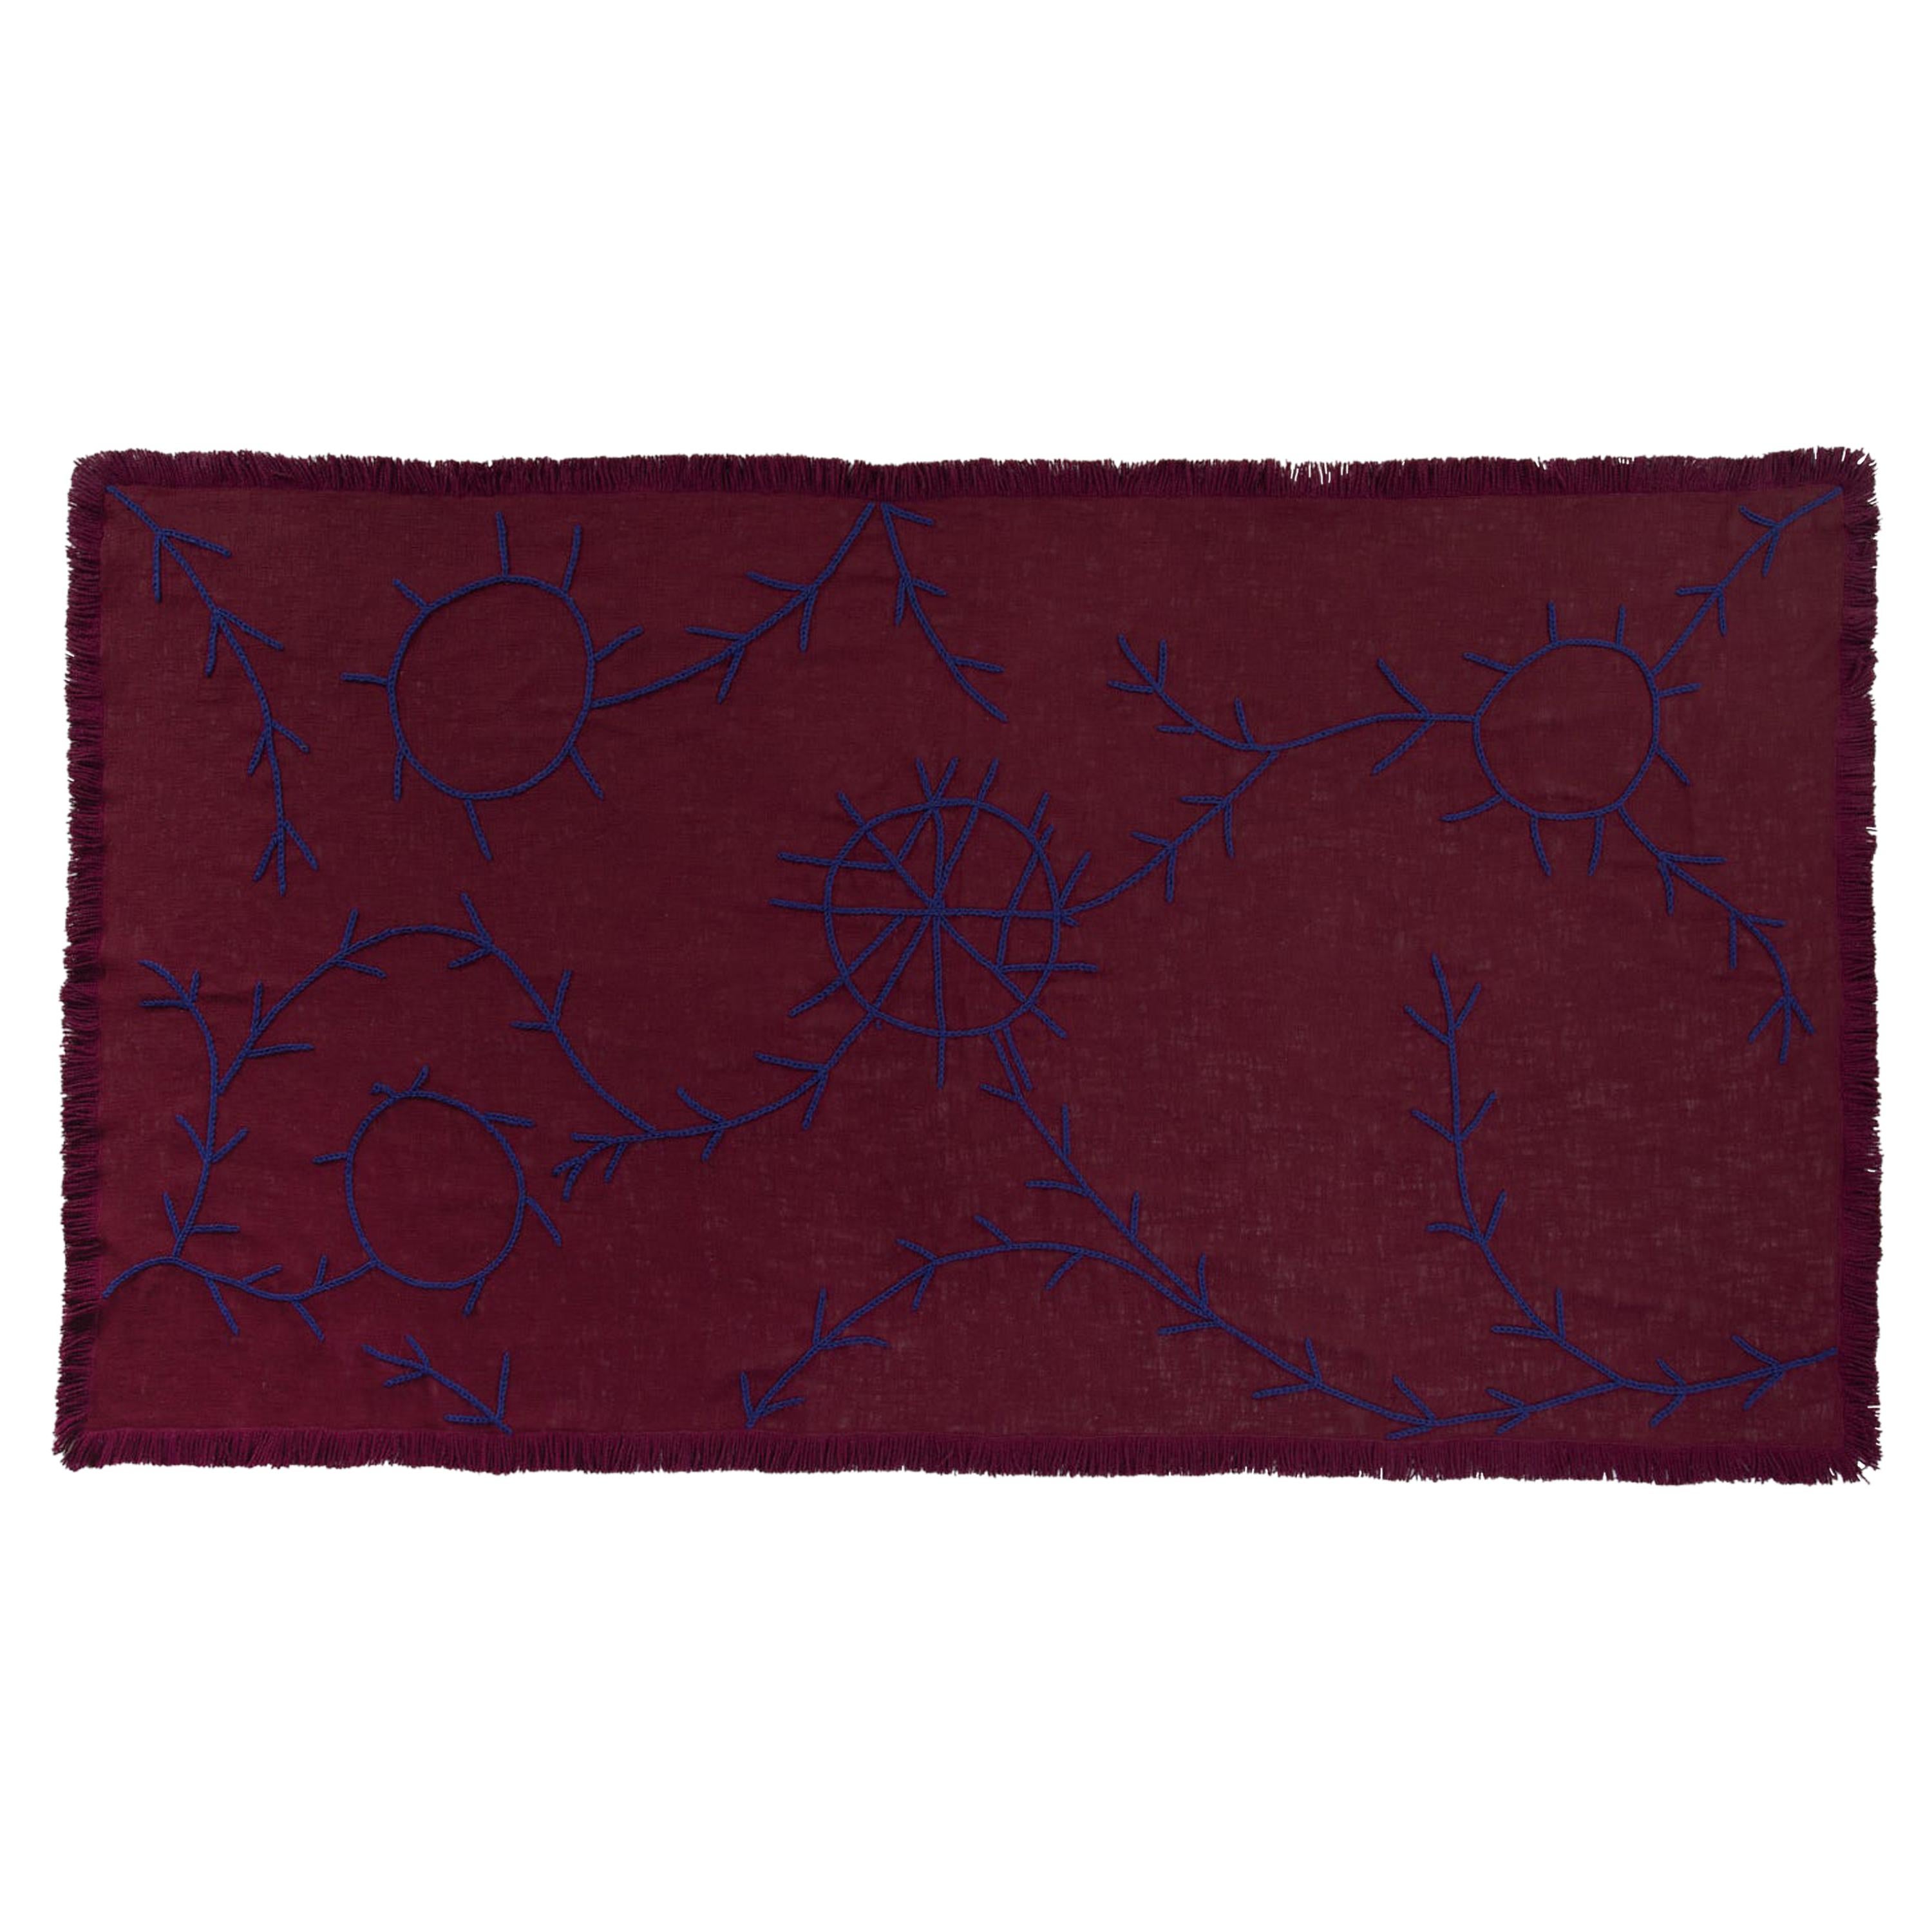 Trim, Hand Embroidered Burgundy Throw Blanket